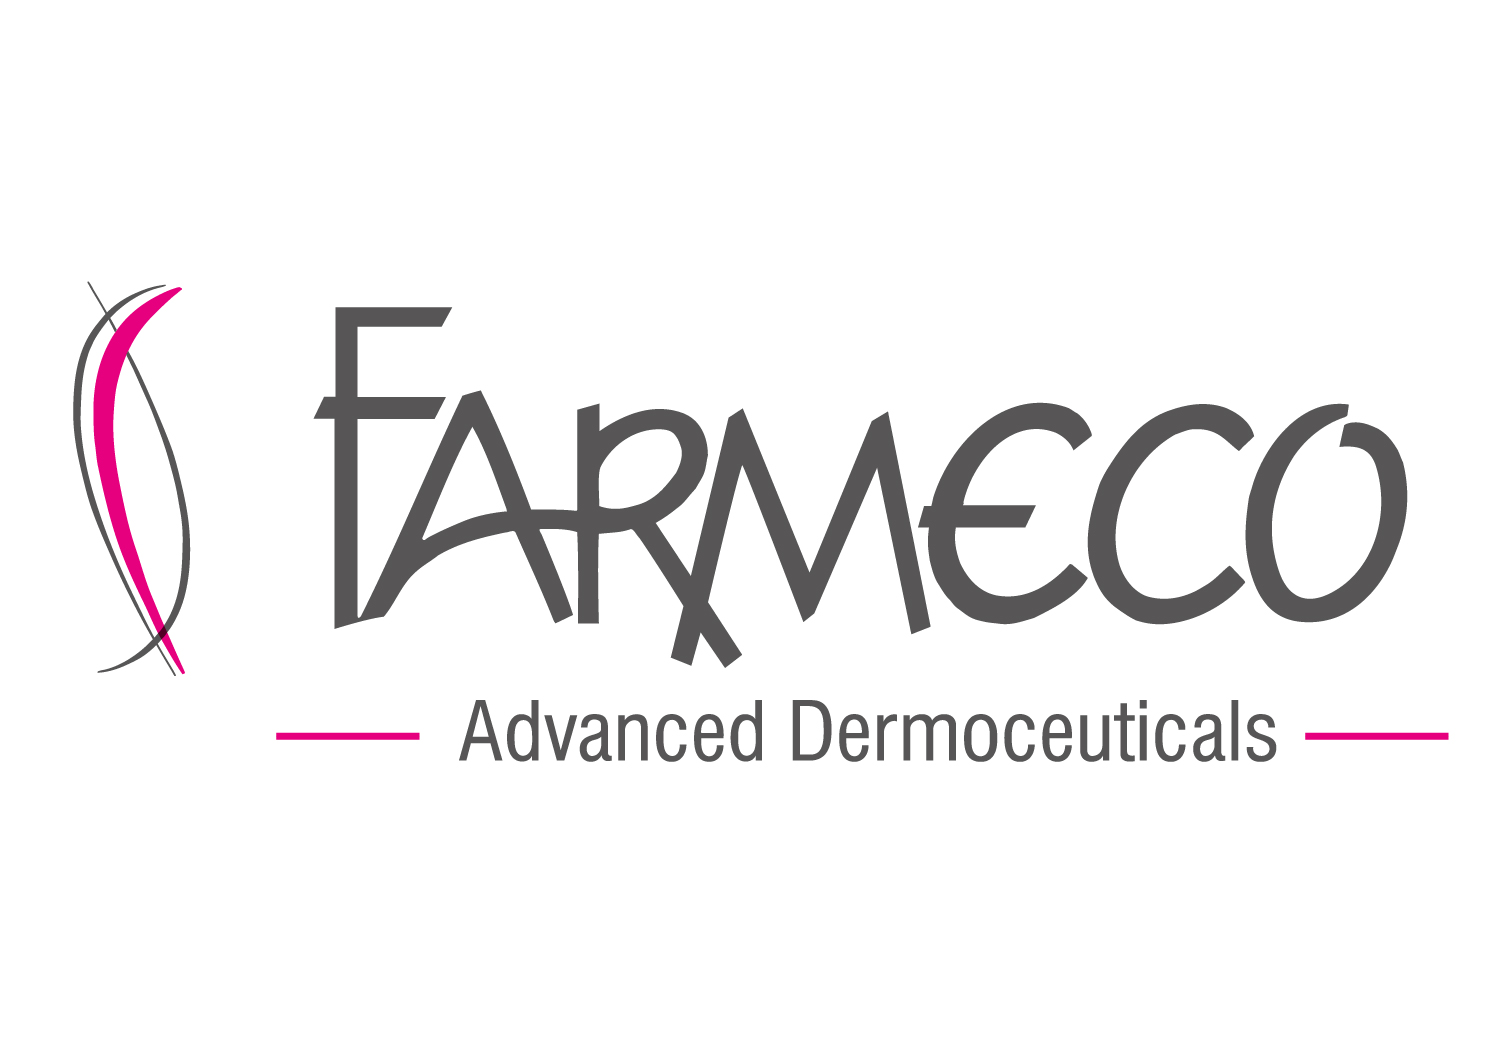 FARMECO S.A. DERMOCOSMETICS